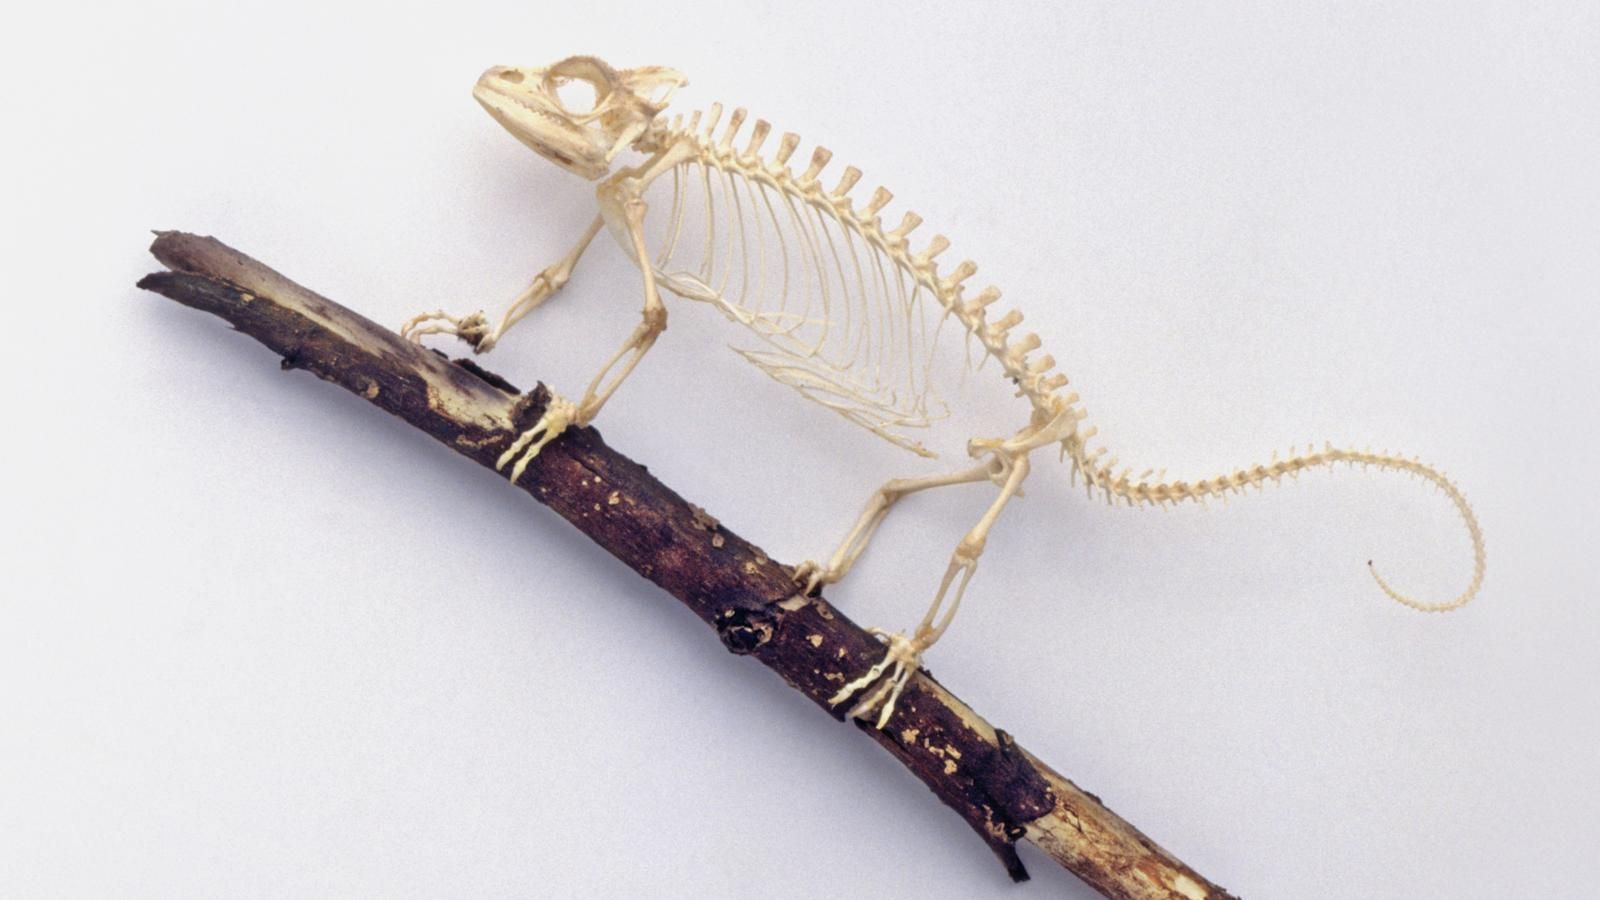 ¿A qué animal pertenece este esqueleto?